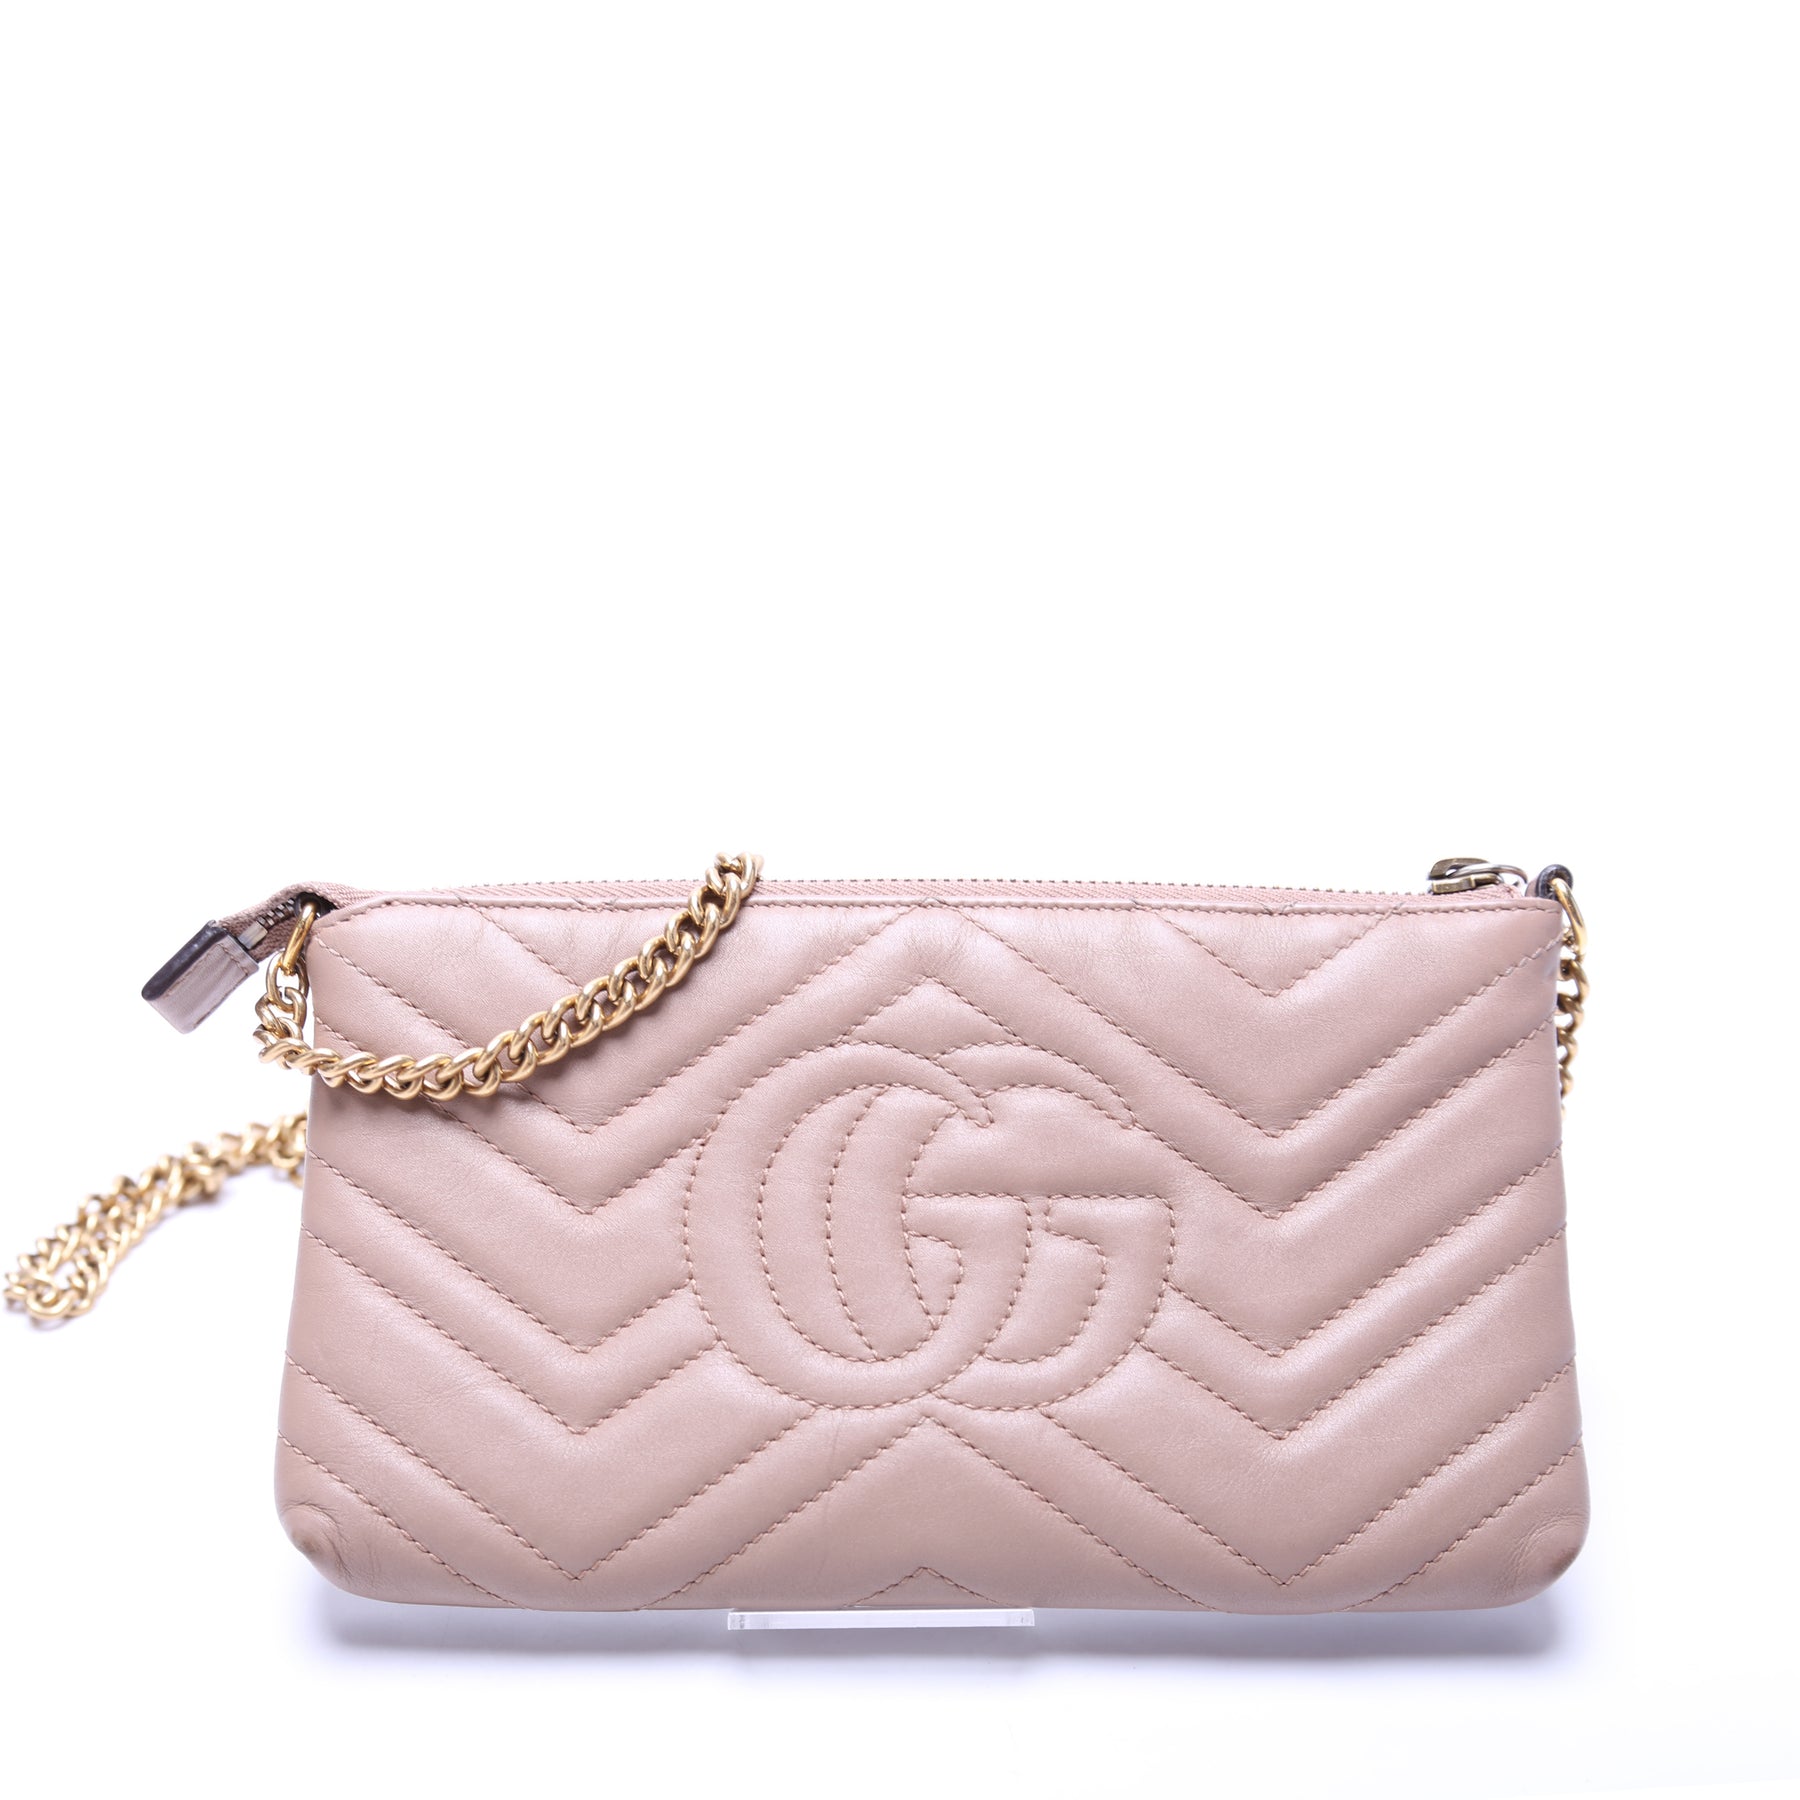 GG Marmont mini chain bag